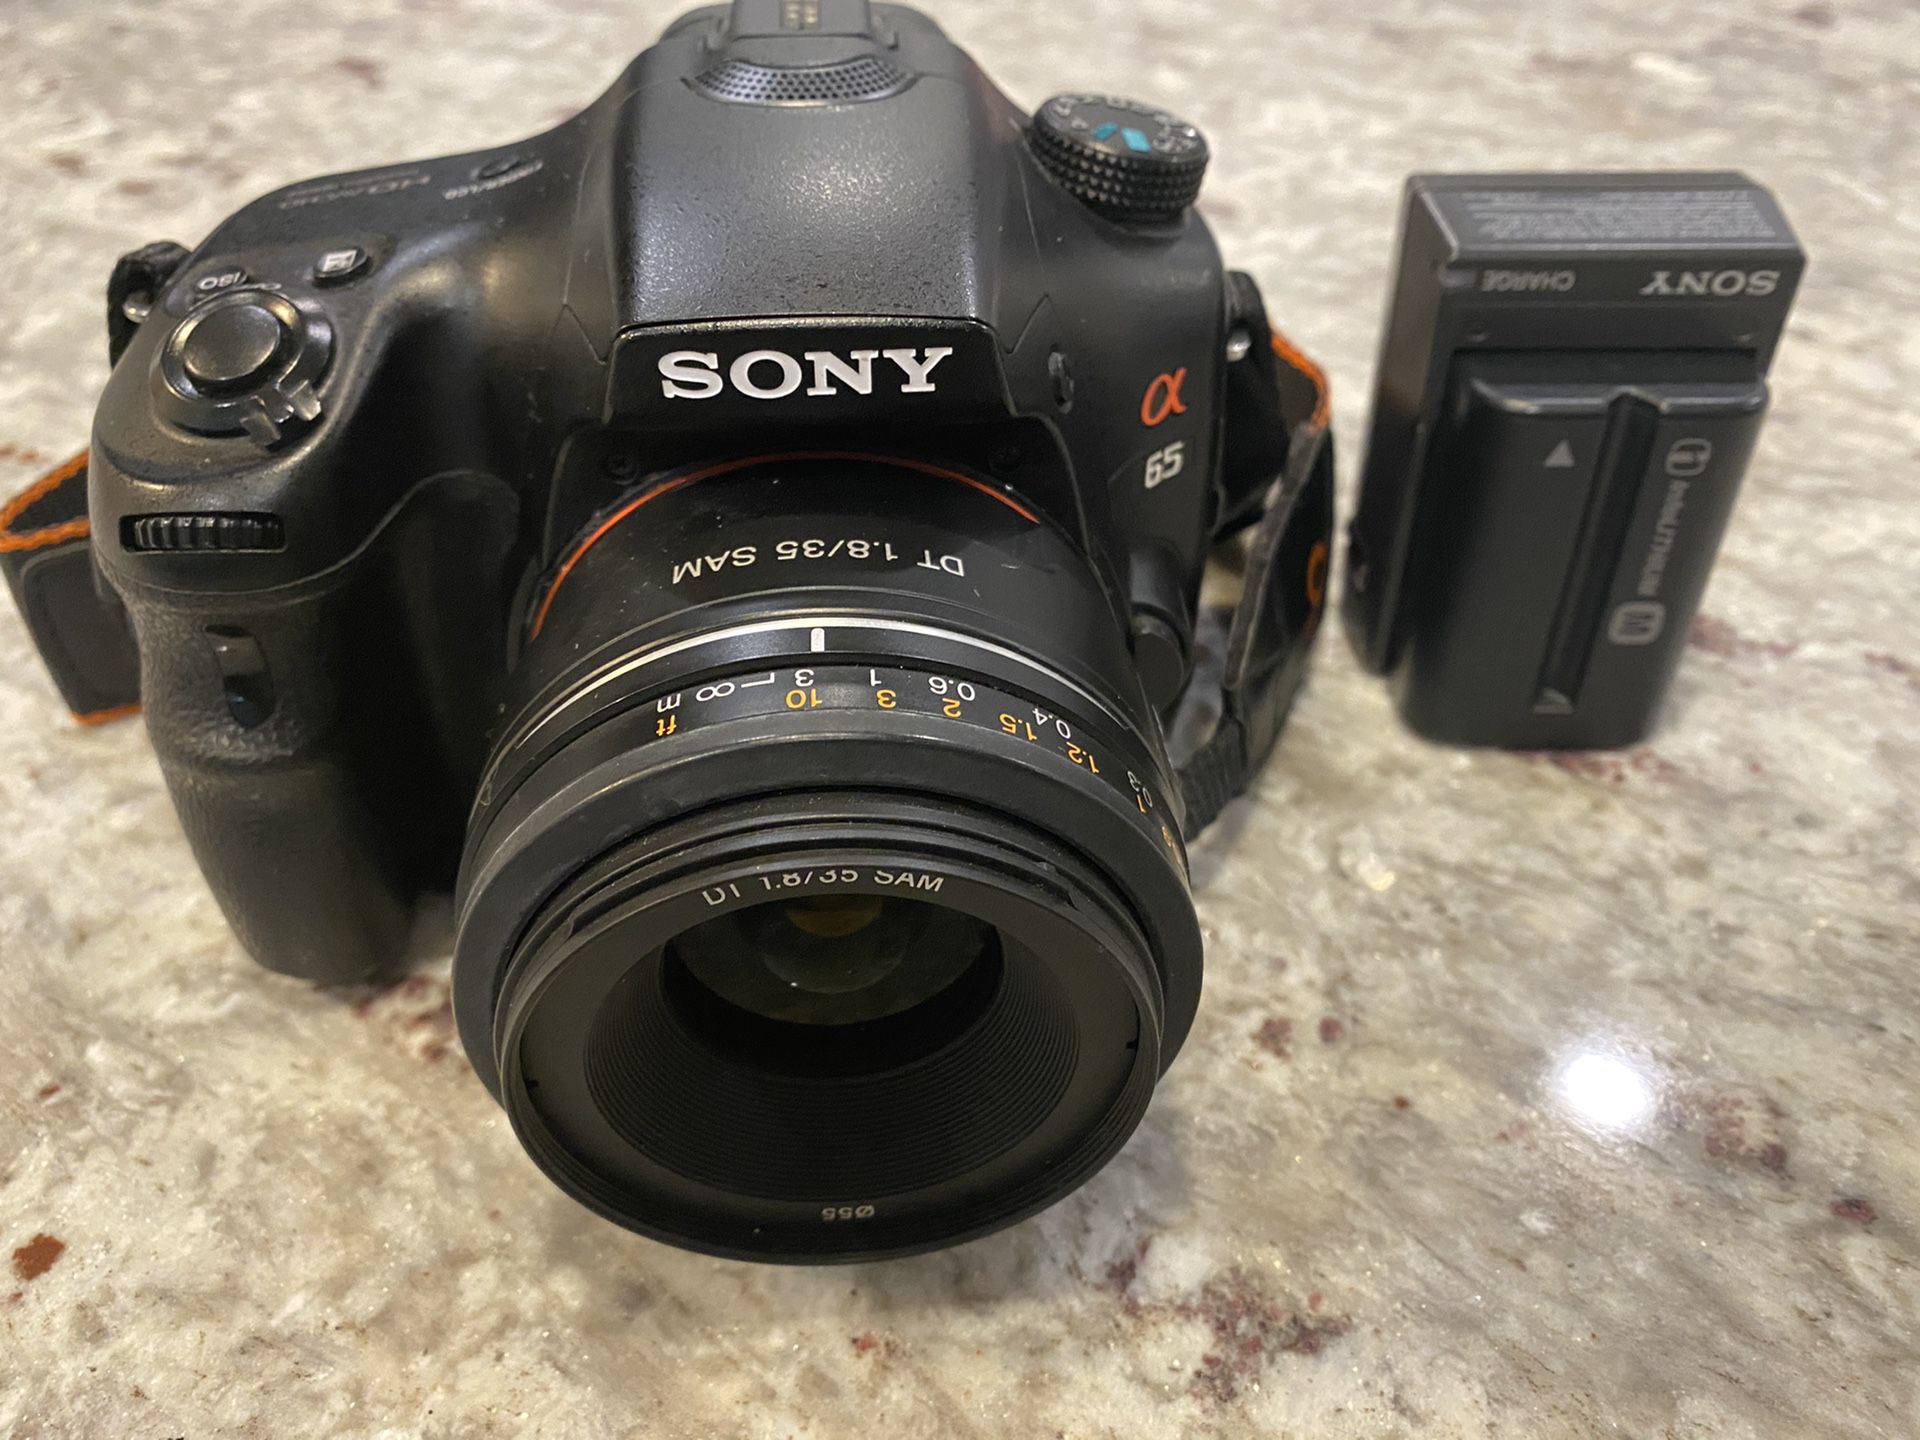 Sony a65 camera and lens combo